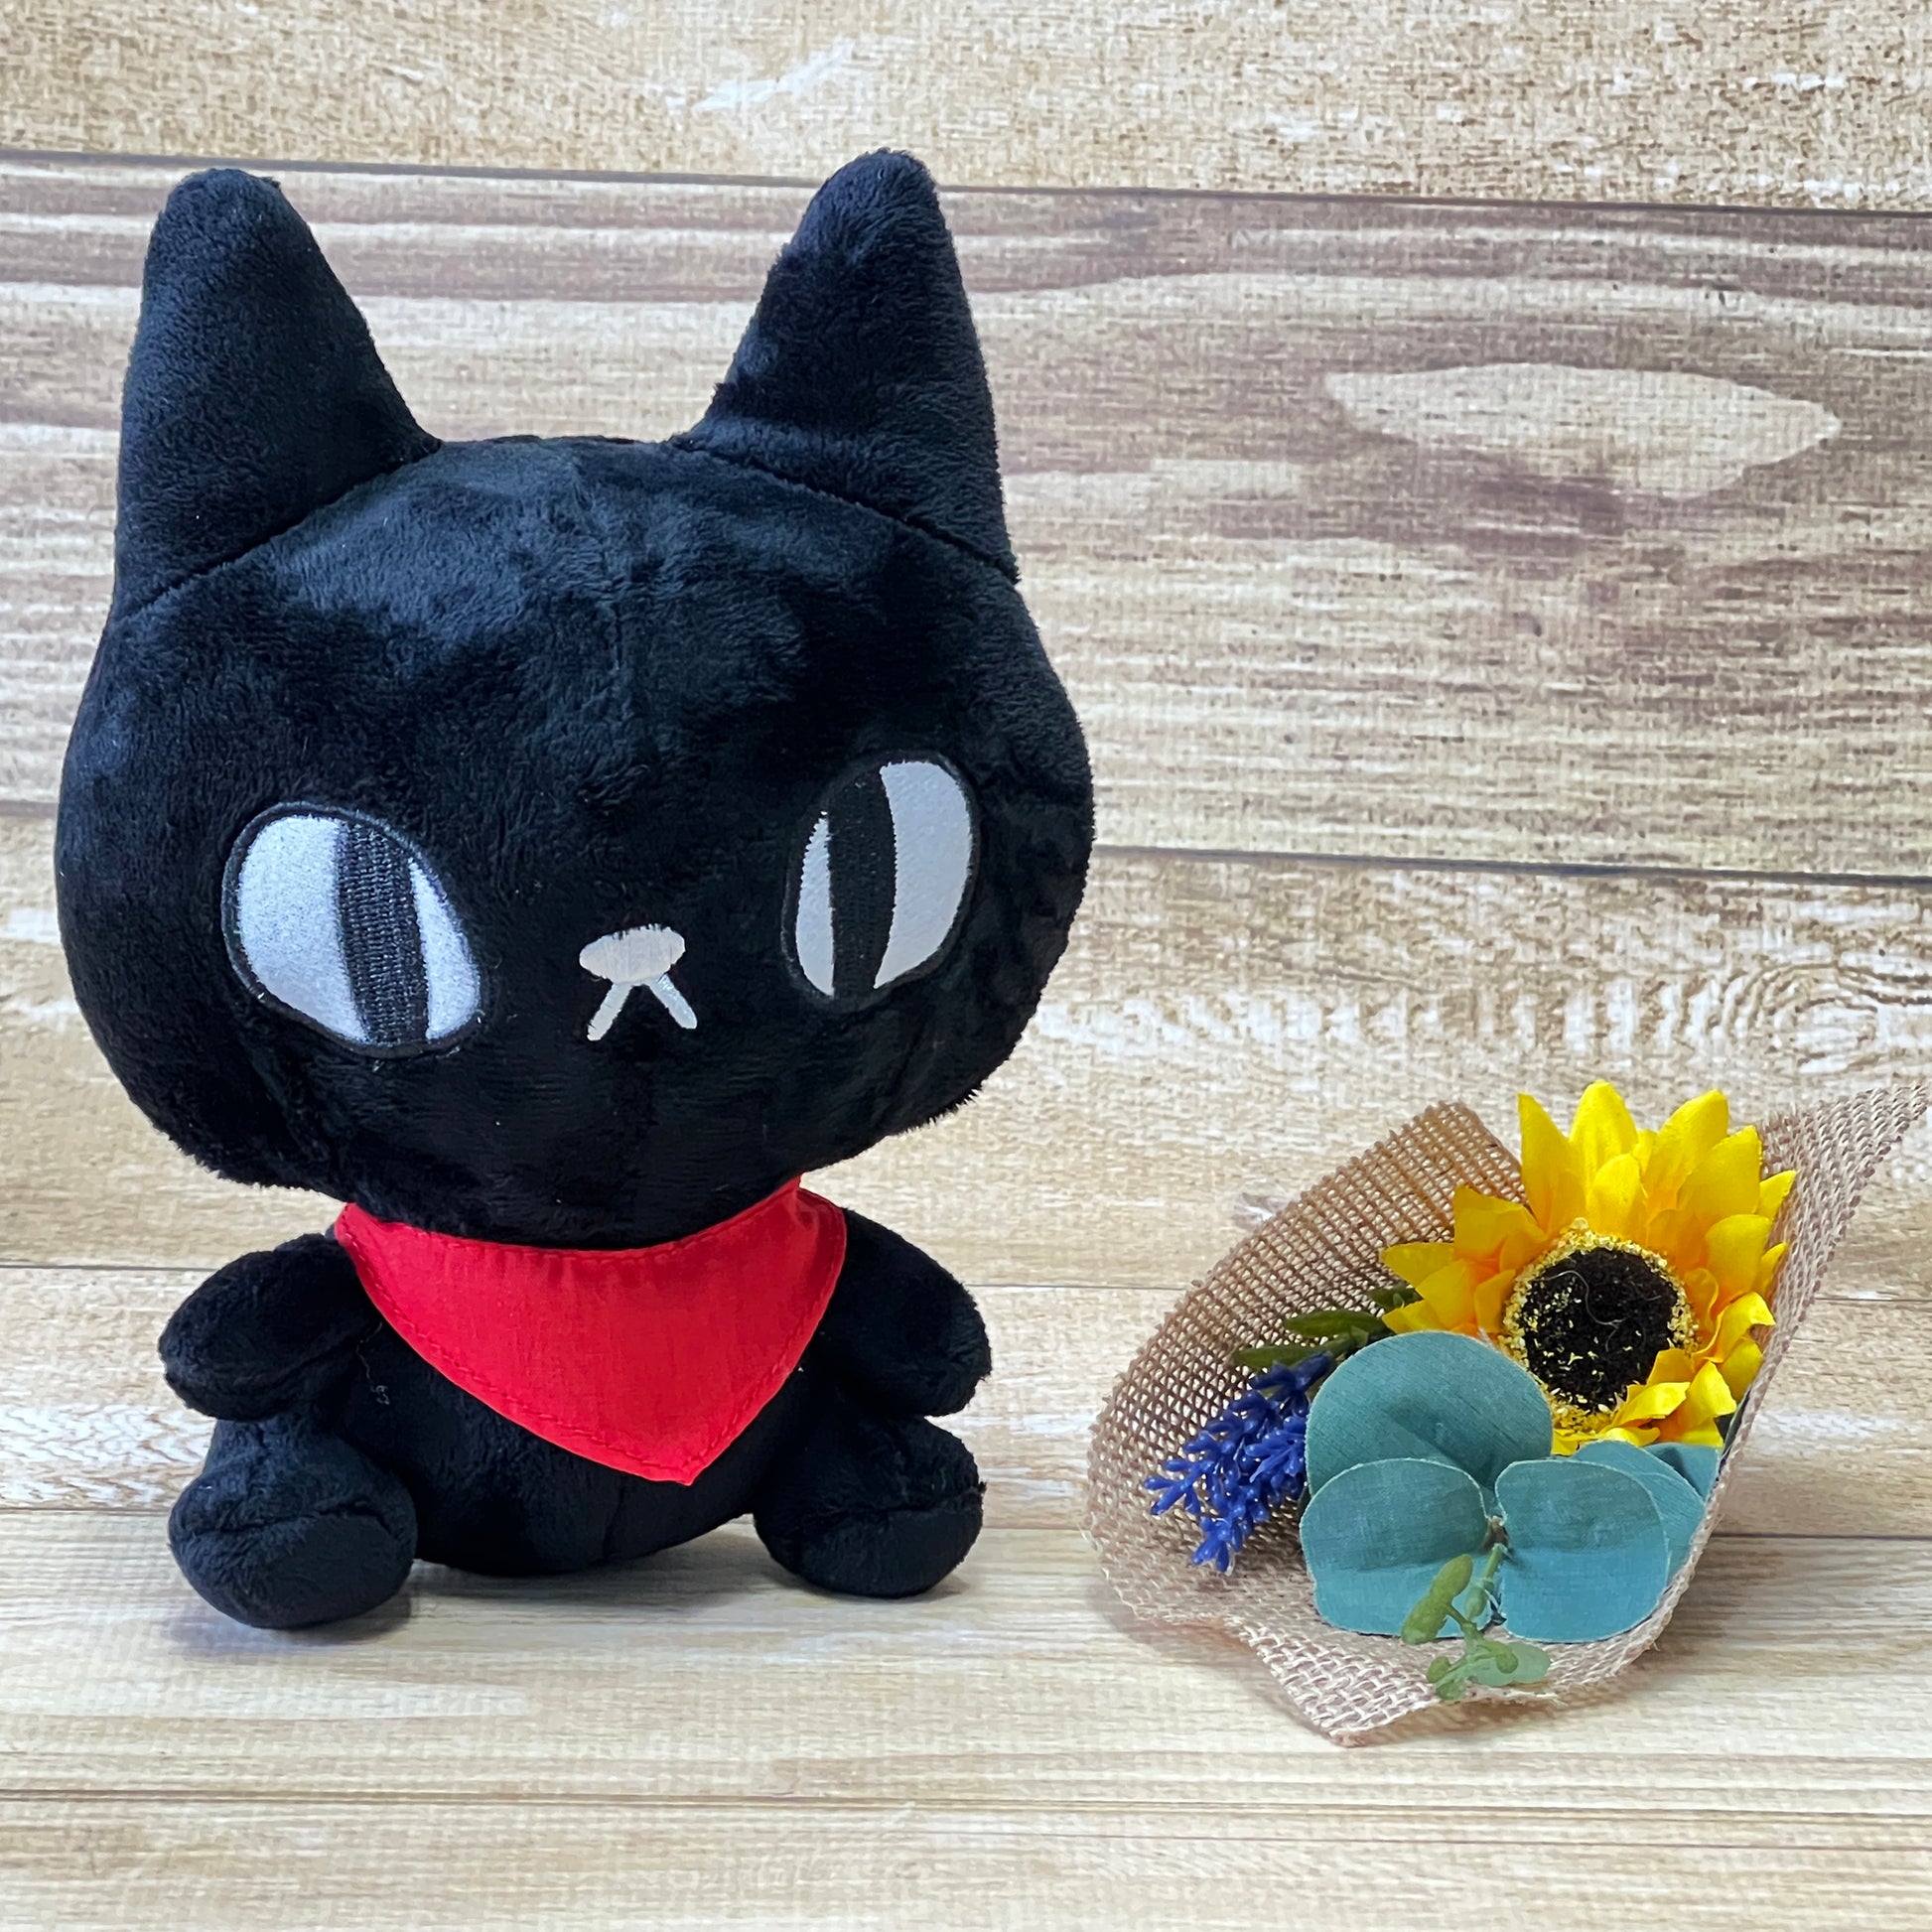 Black Cat 7 Plush Cute Stuffed Animal Toy Hakone No Koneko, 44% OFF